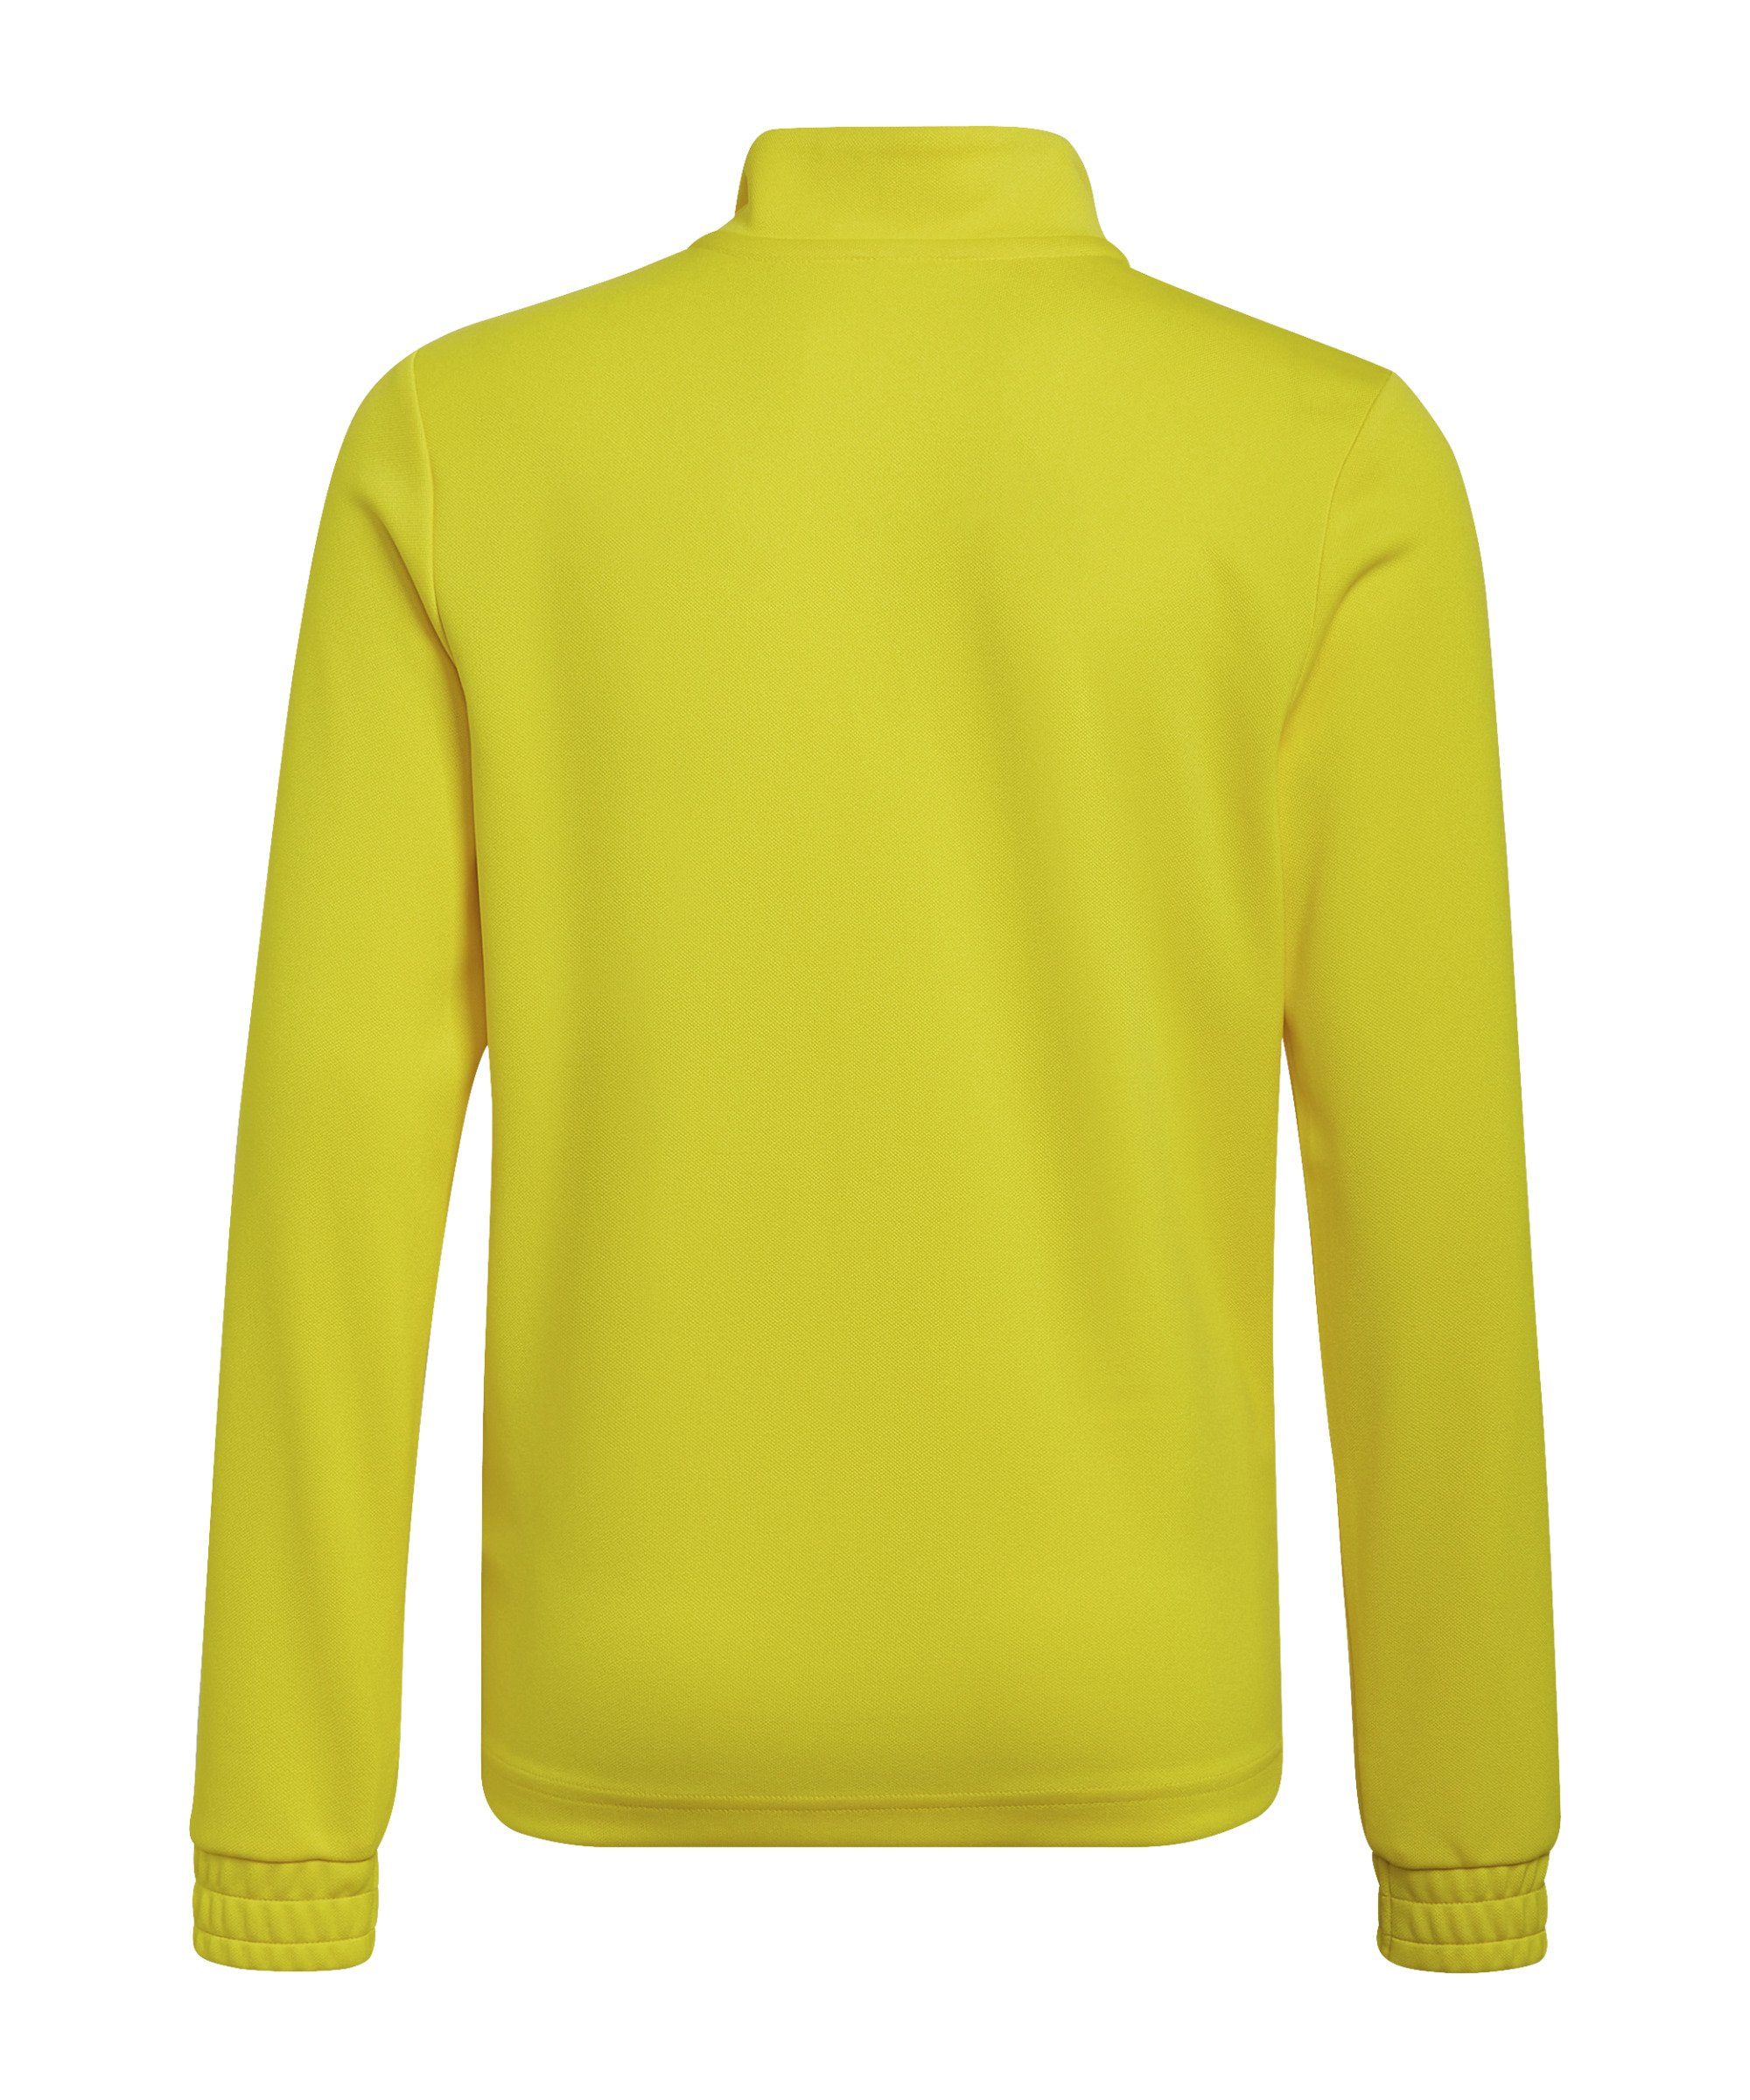 Performance Kids Sweatshirt HalfZip adidas 22 gelbschwarzgelb Sweatshirt Entrada